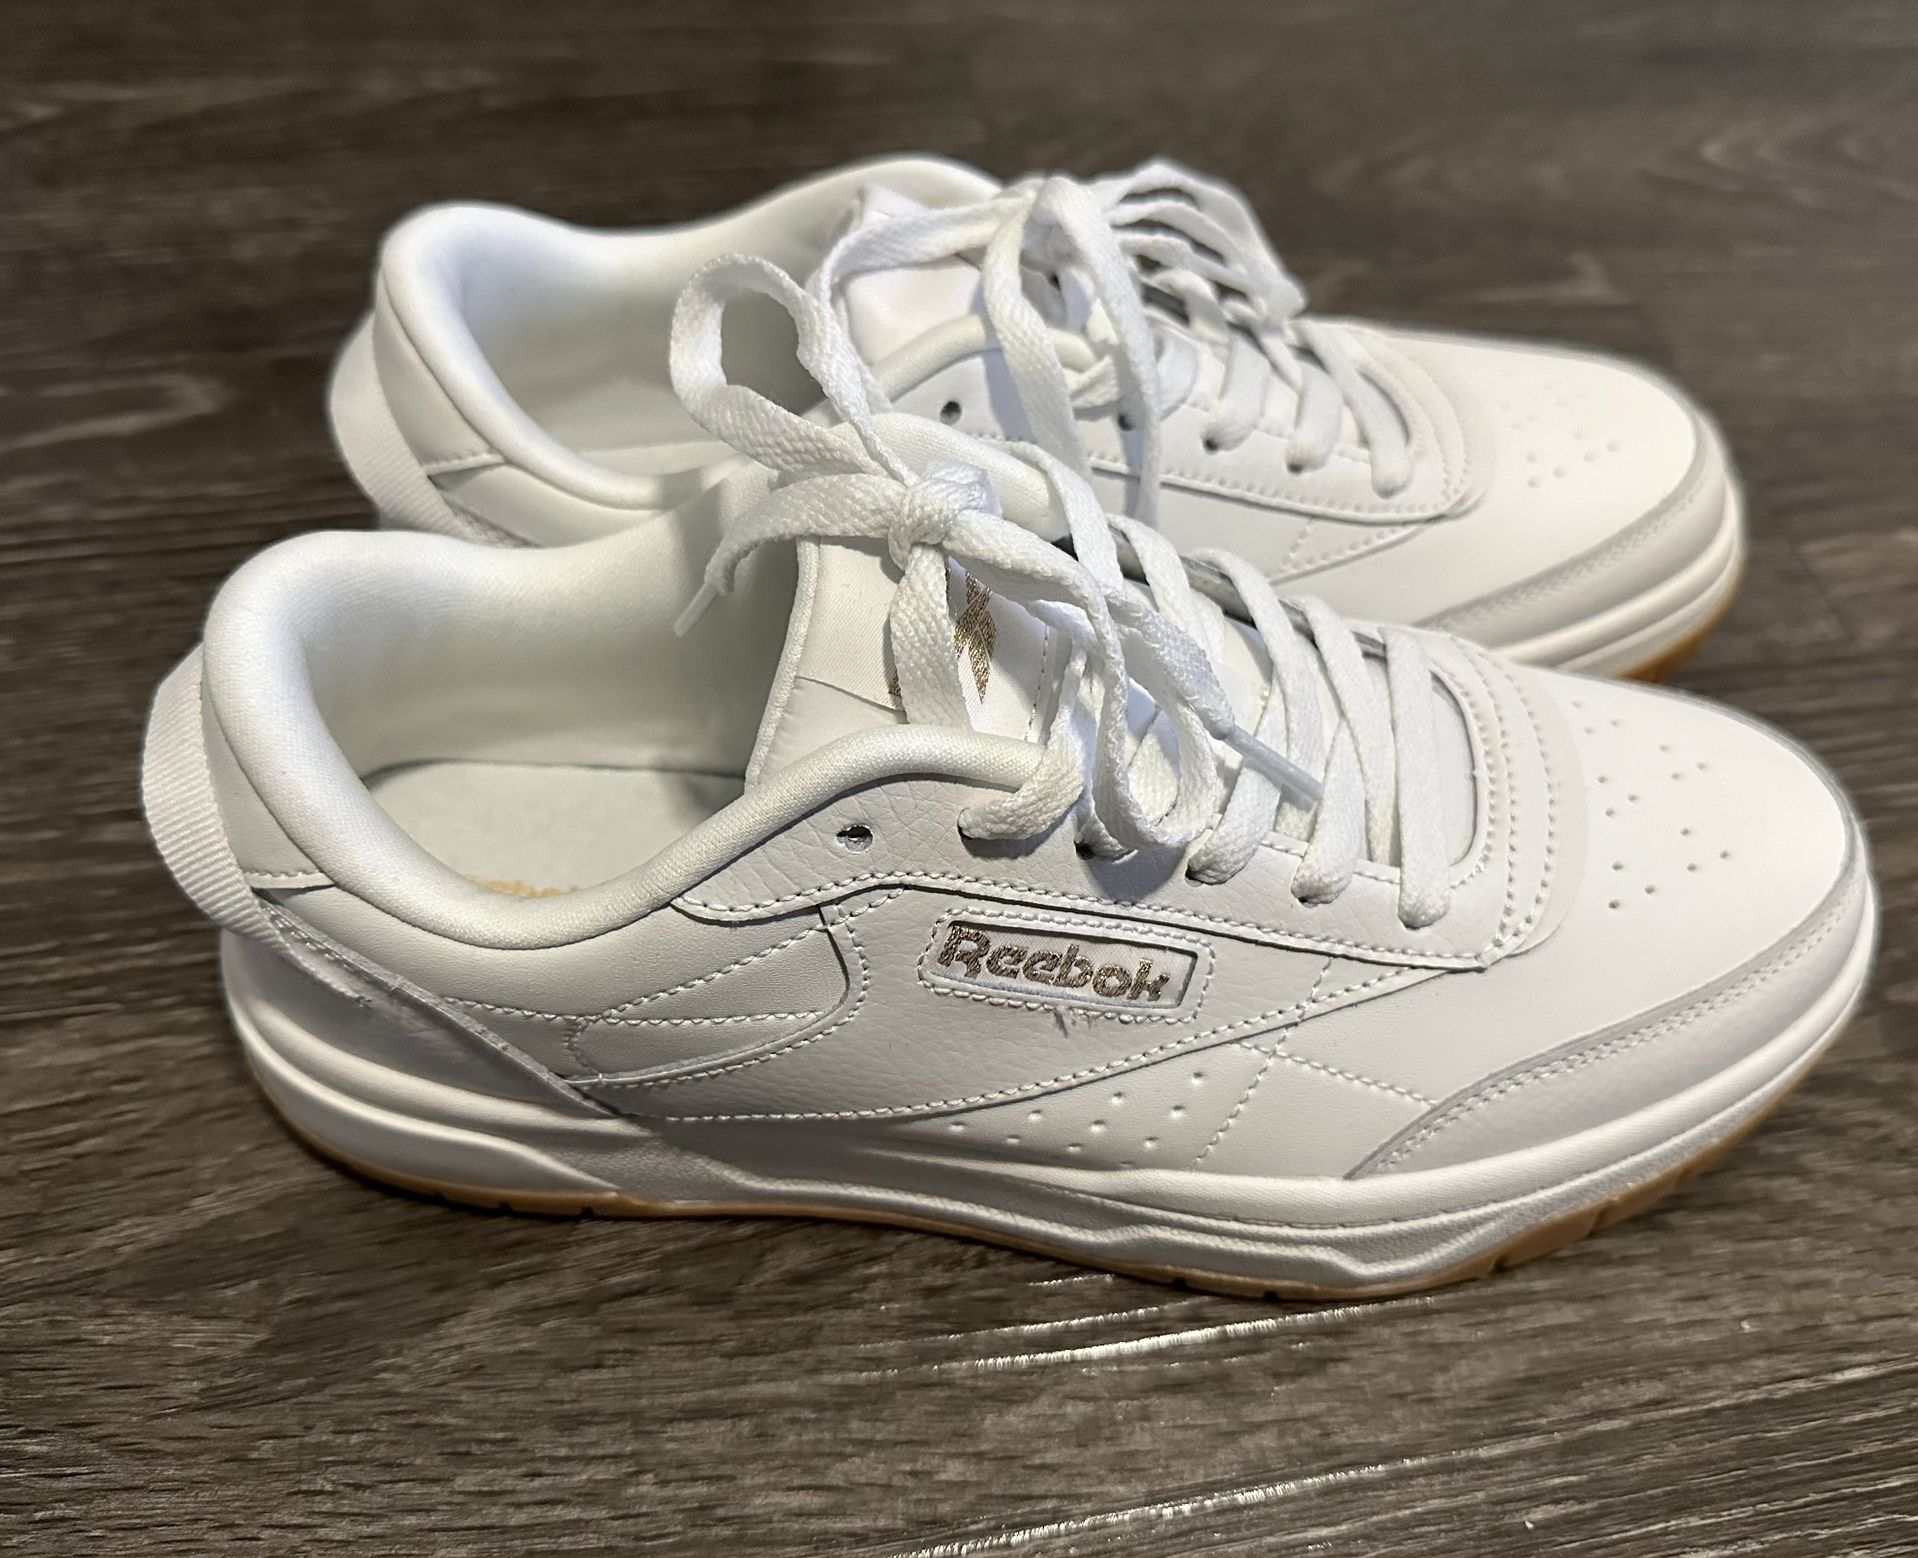 New! Never Worn Womens Ladies Reebok Tech Geo Sneakers Shoes Size 9